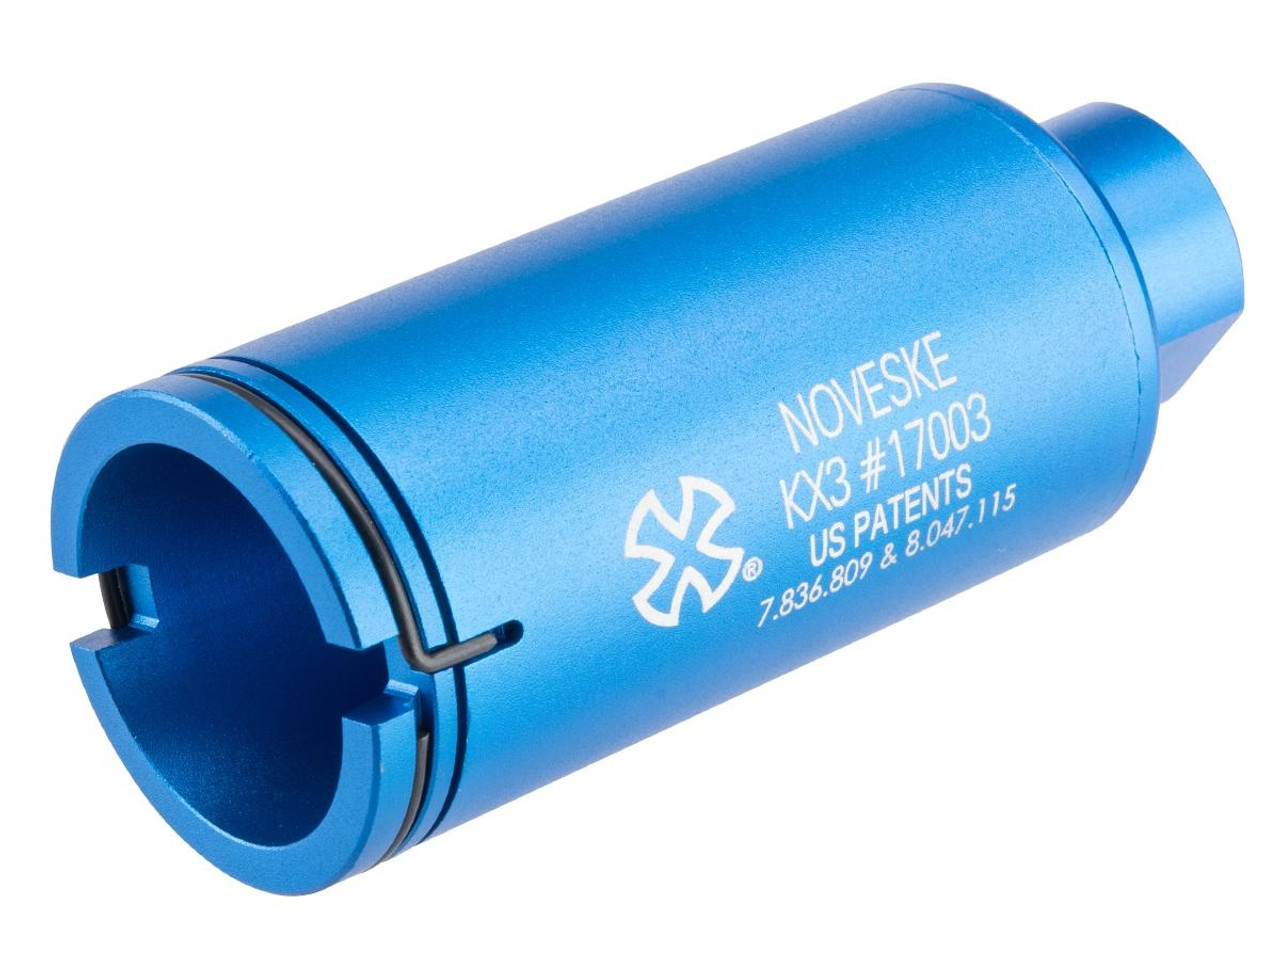 EMG Noveske KX3 Amplifier w/ Compact Nano Tracer | Select Color